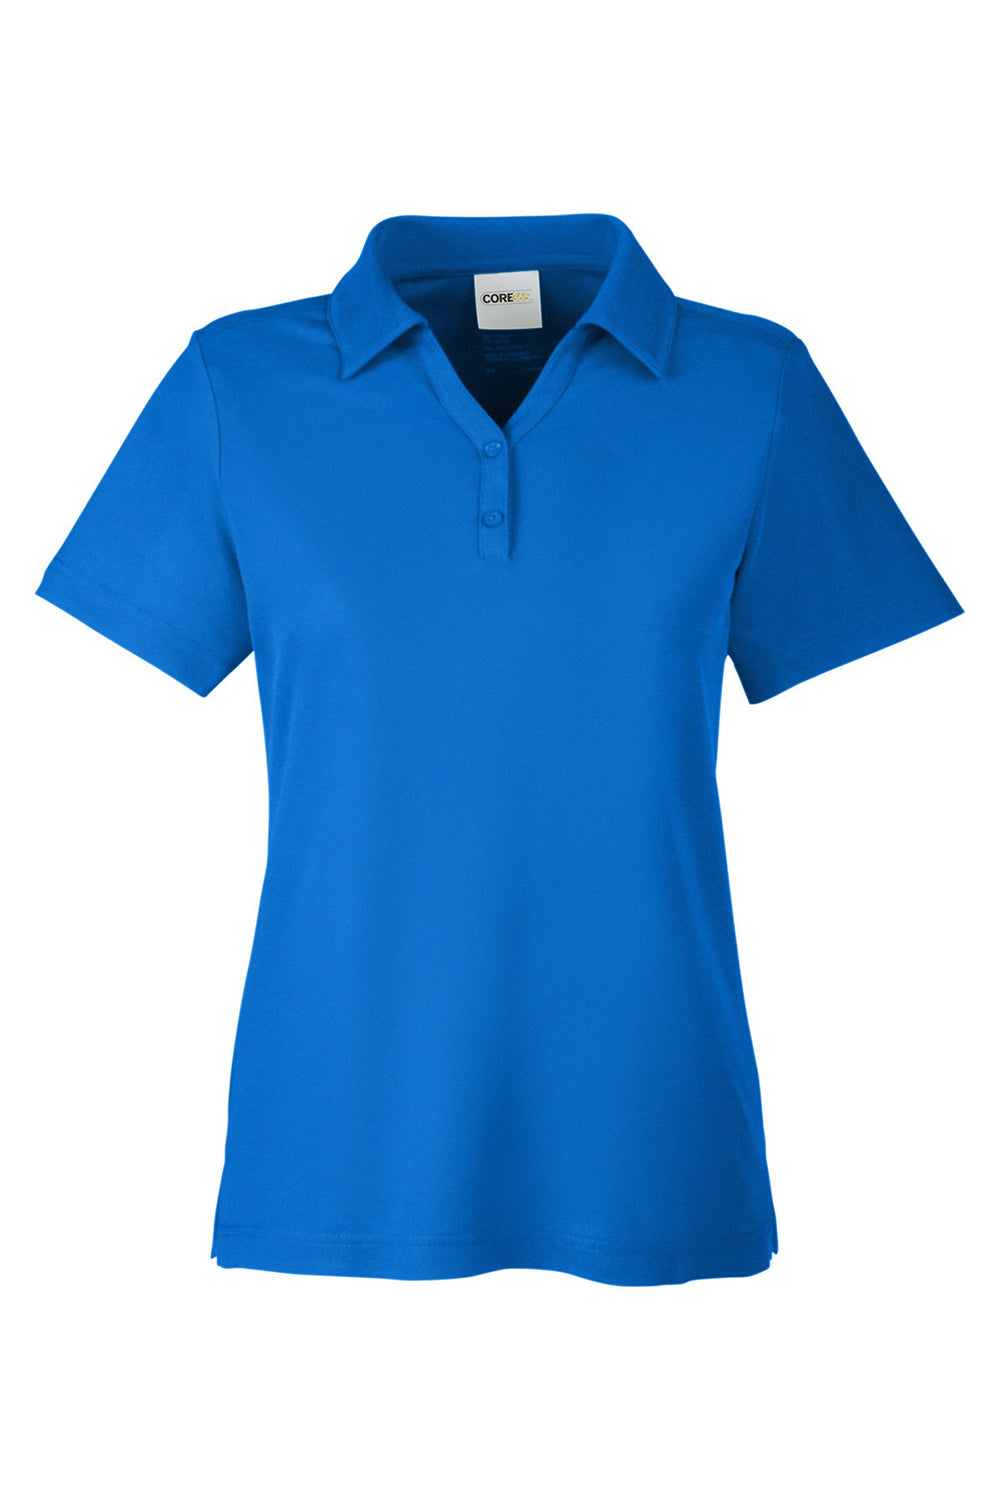 Core 365 CE112W Womens Fusion ChromaSoft Performance Moisture Wicking Pique Short Sleeve Polo Shirt True Royal Blue Flat Front